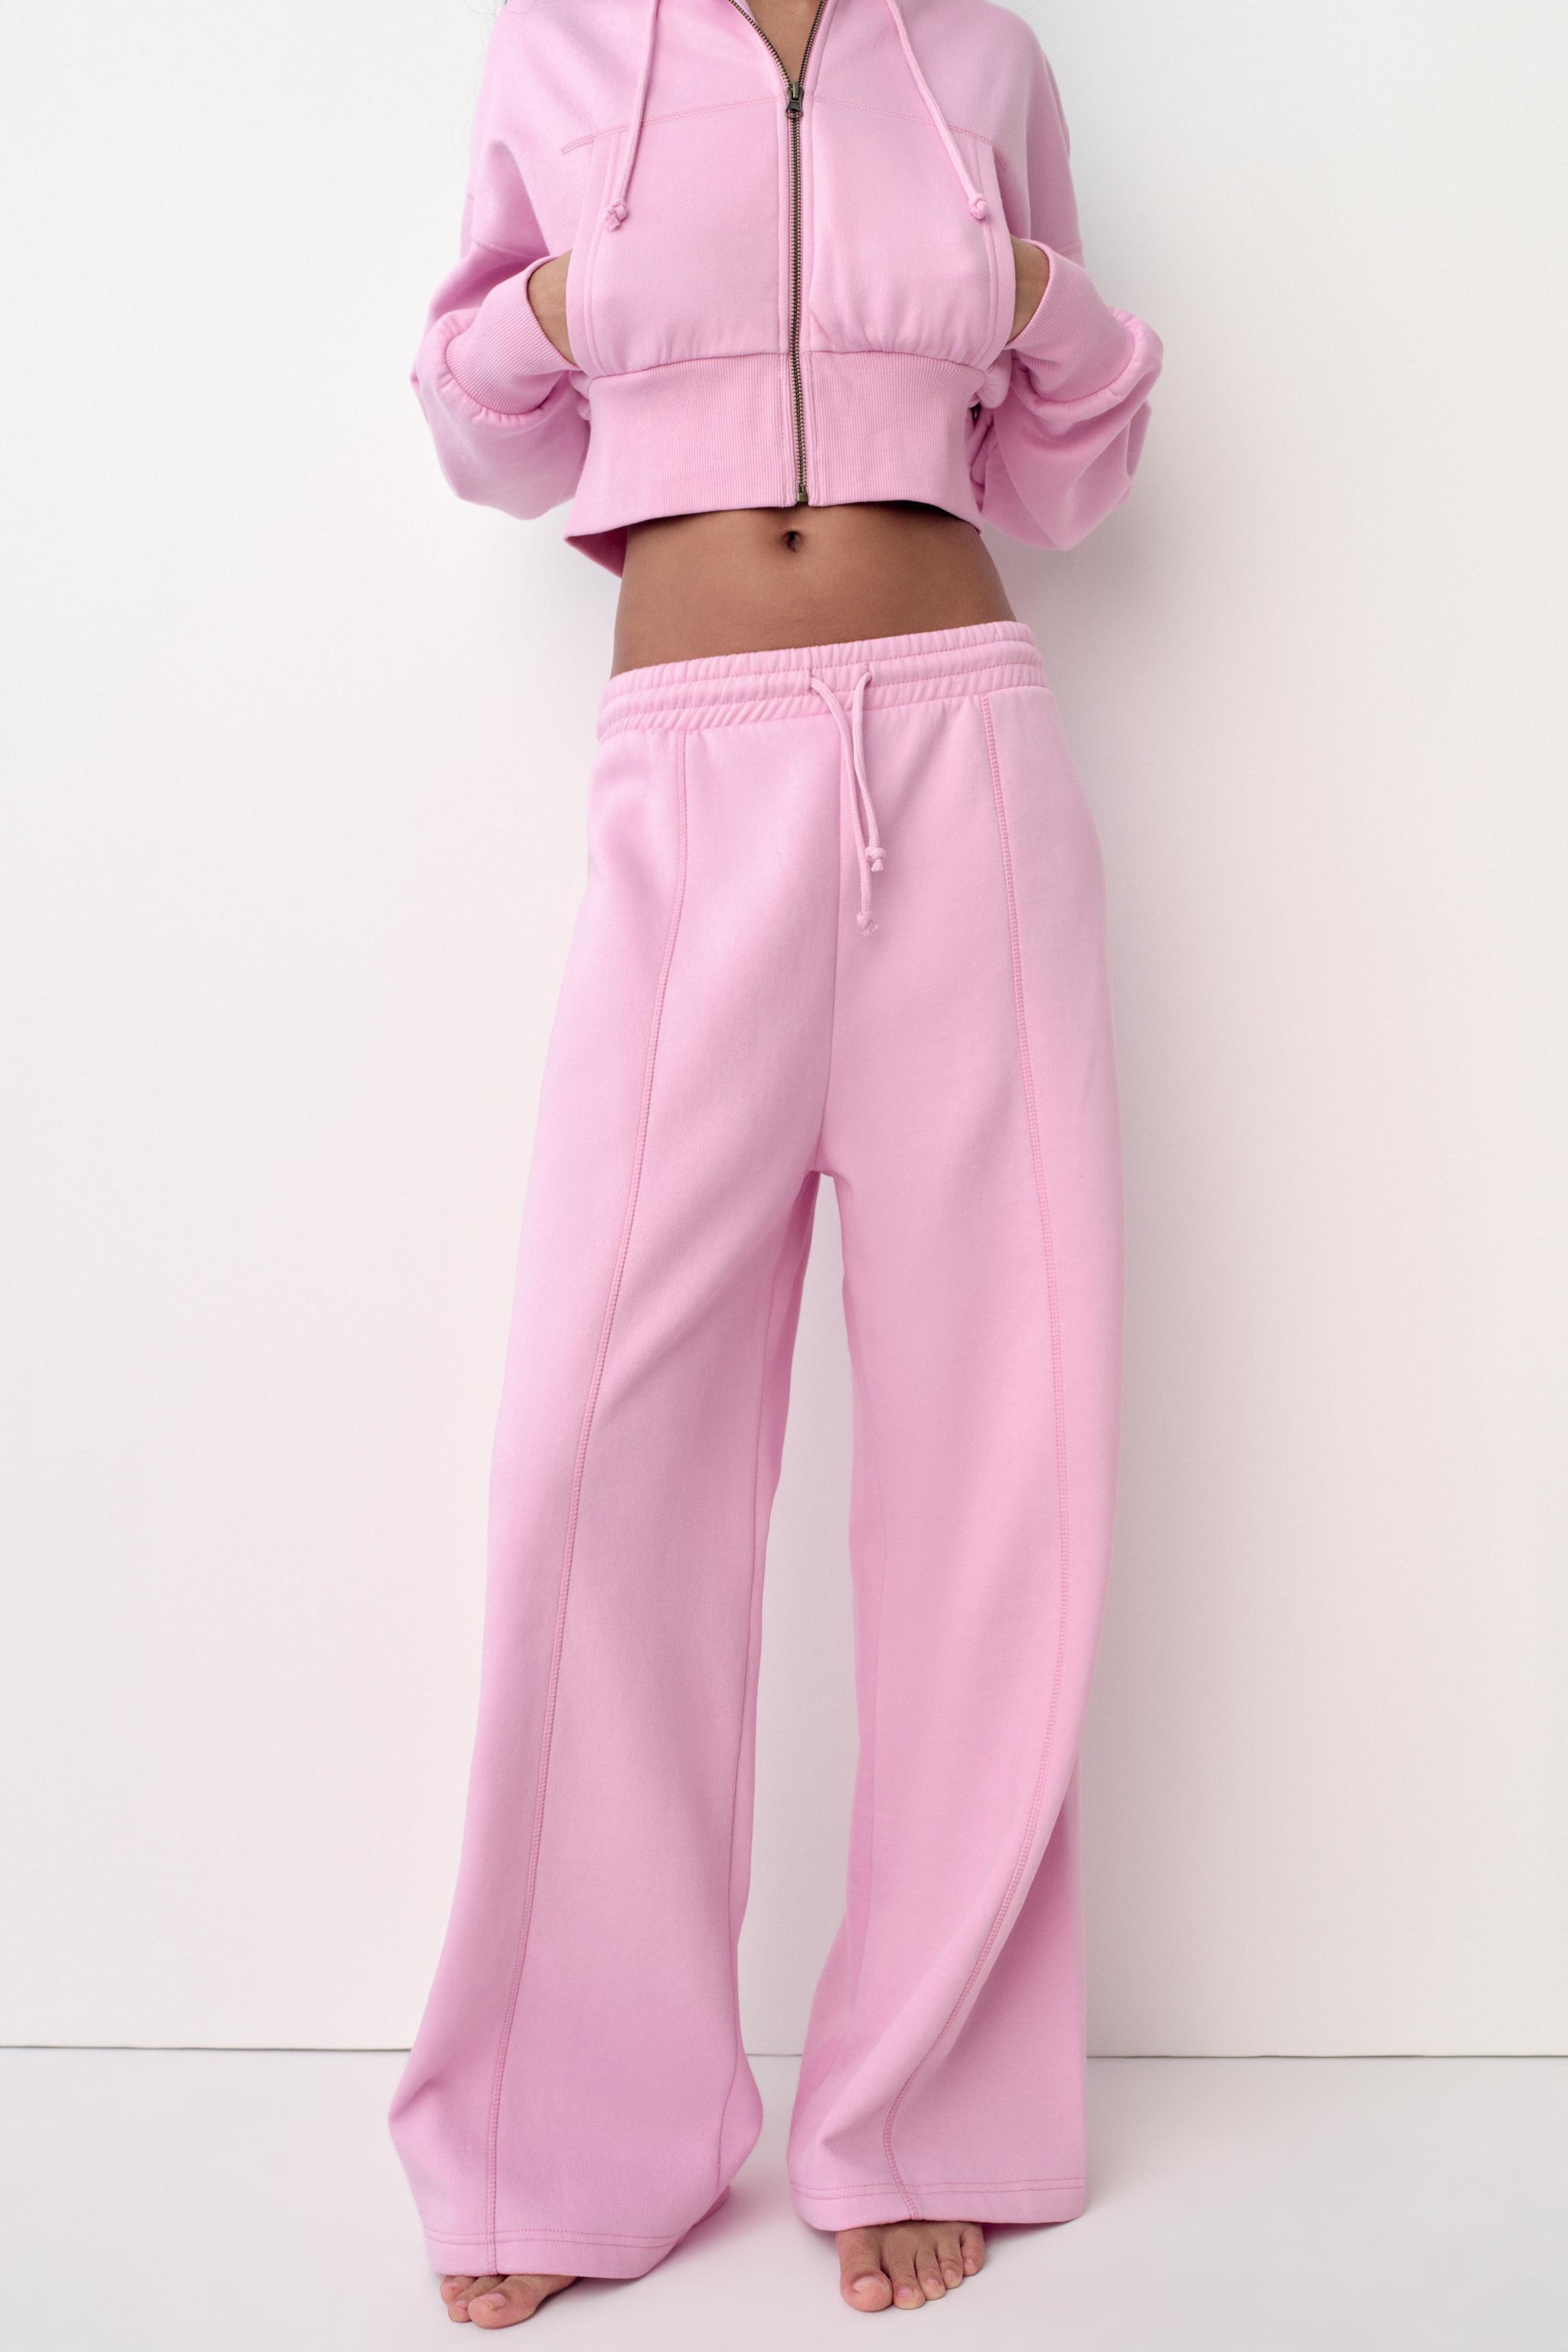 Zara Womens Pink Satin Corset Top Pants Trousers Set Site S